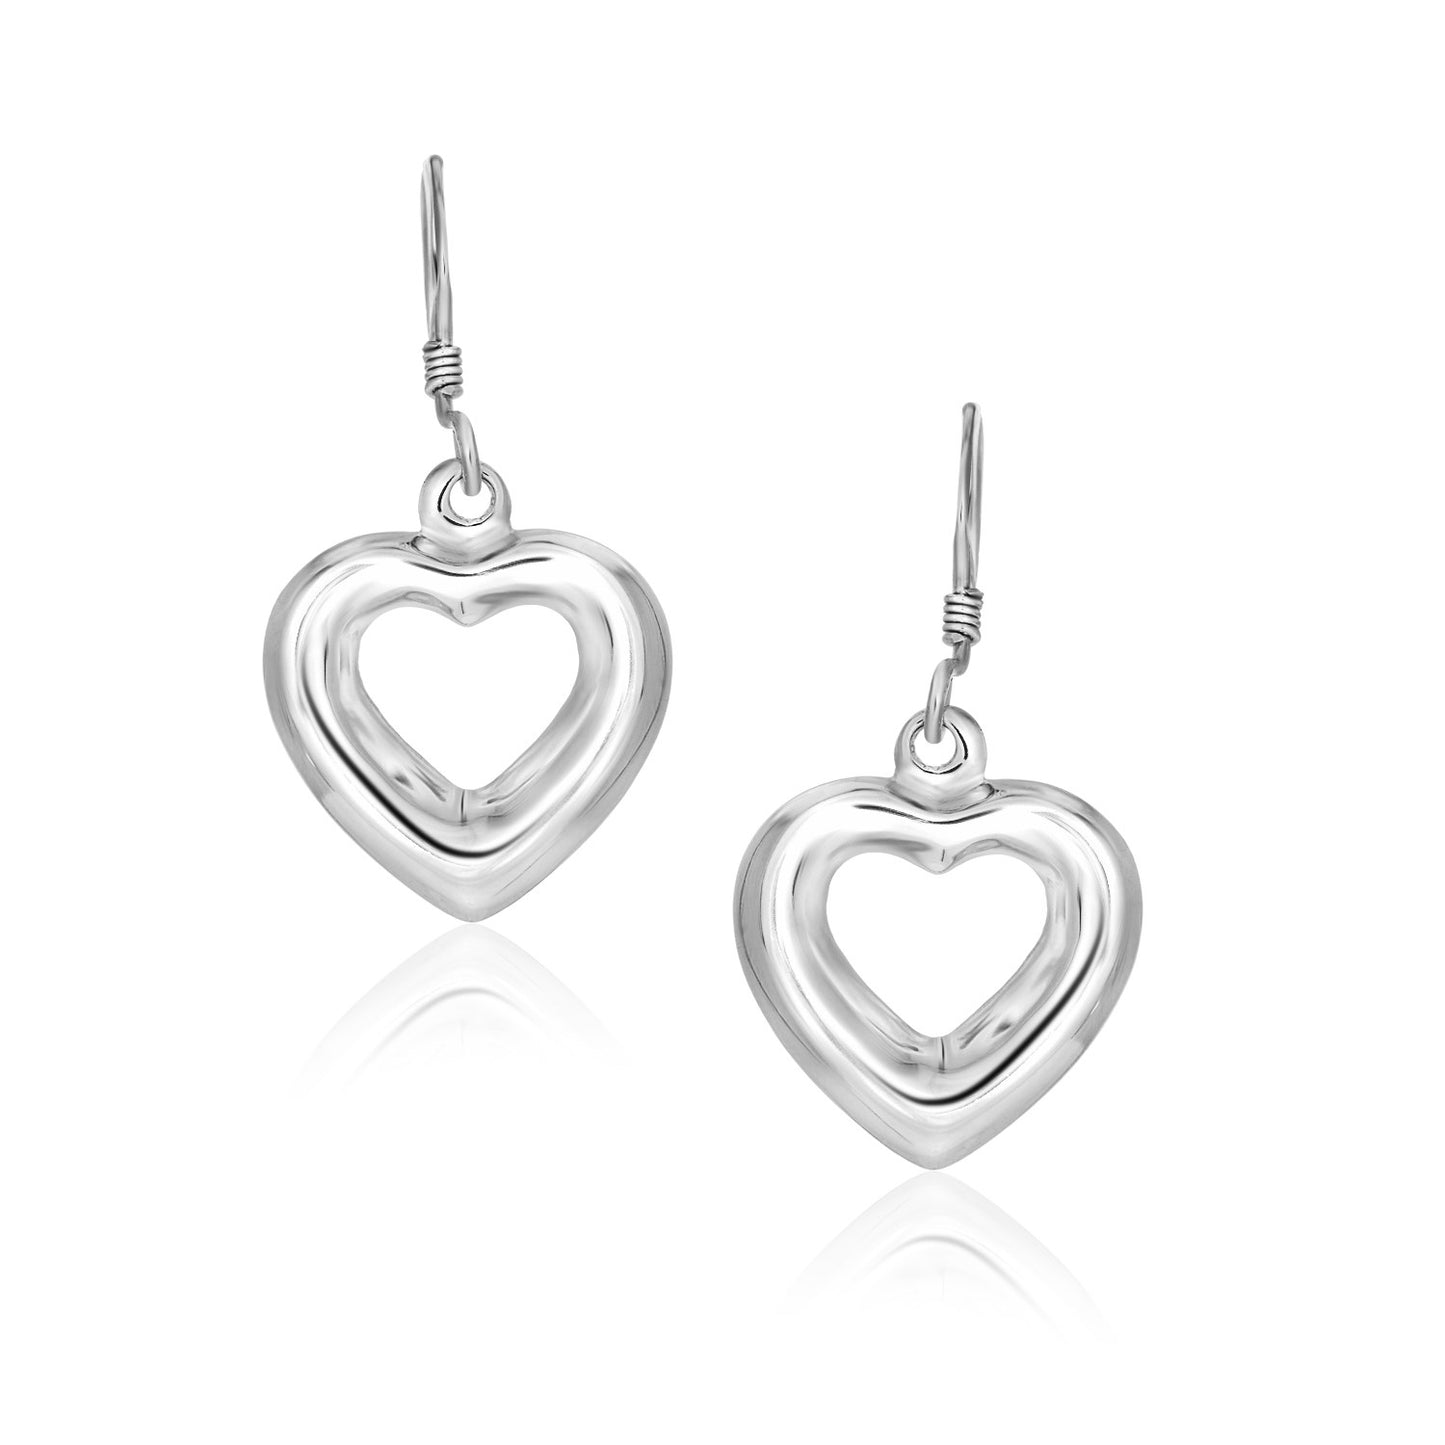 Sterling Silver Drop Earrings with a Puffed Open Heart Design